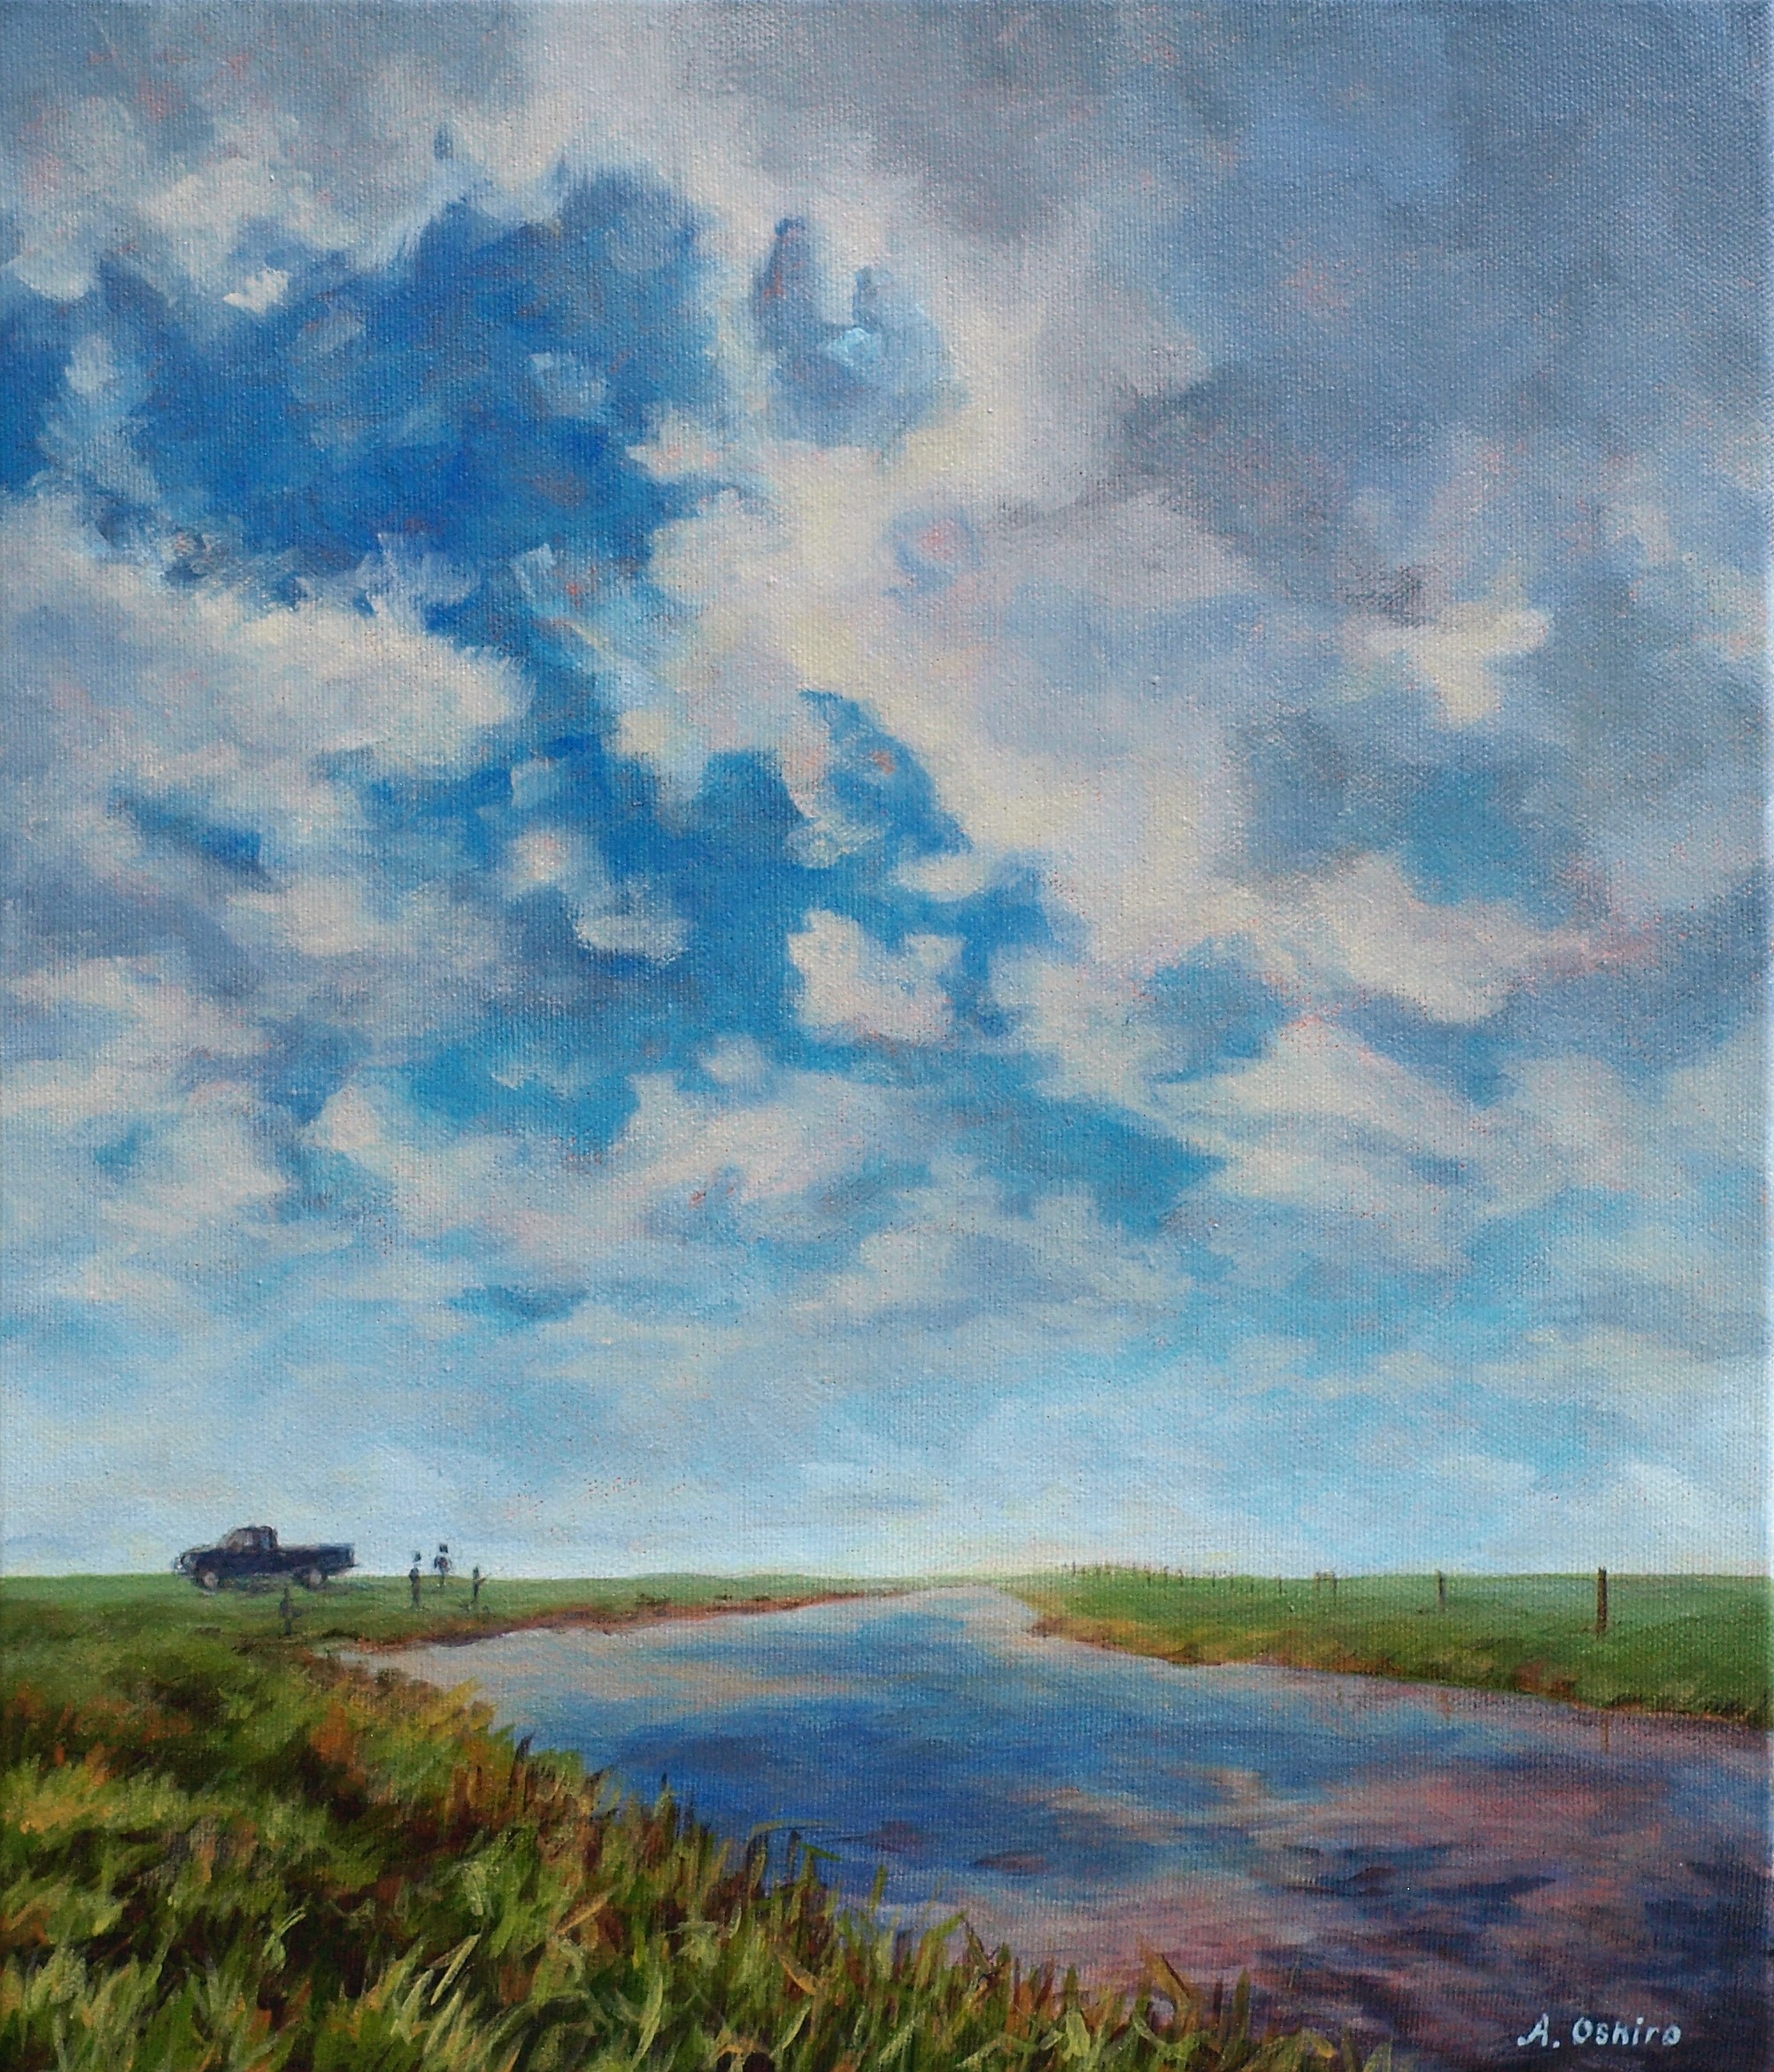 'The Canal' , Acrylic landscape Painting of Alberta fishing spot, truck, clouds and grass, by Ashley Oshiro, Calgary, Alberta, Local Fine Artist, Original Art